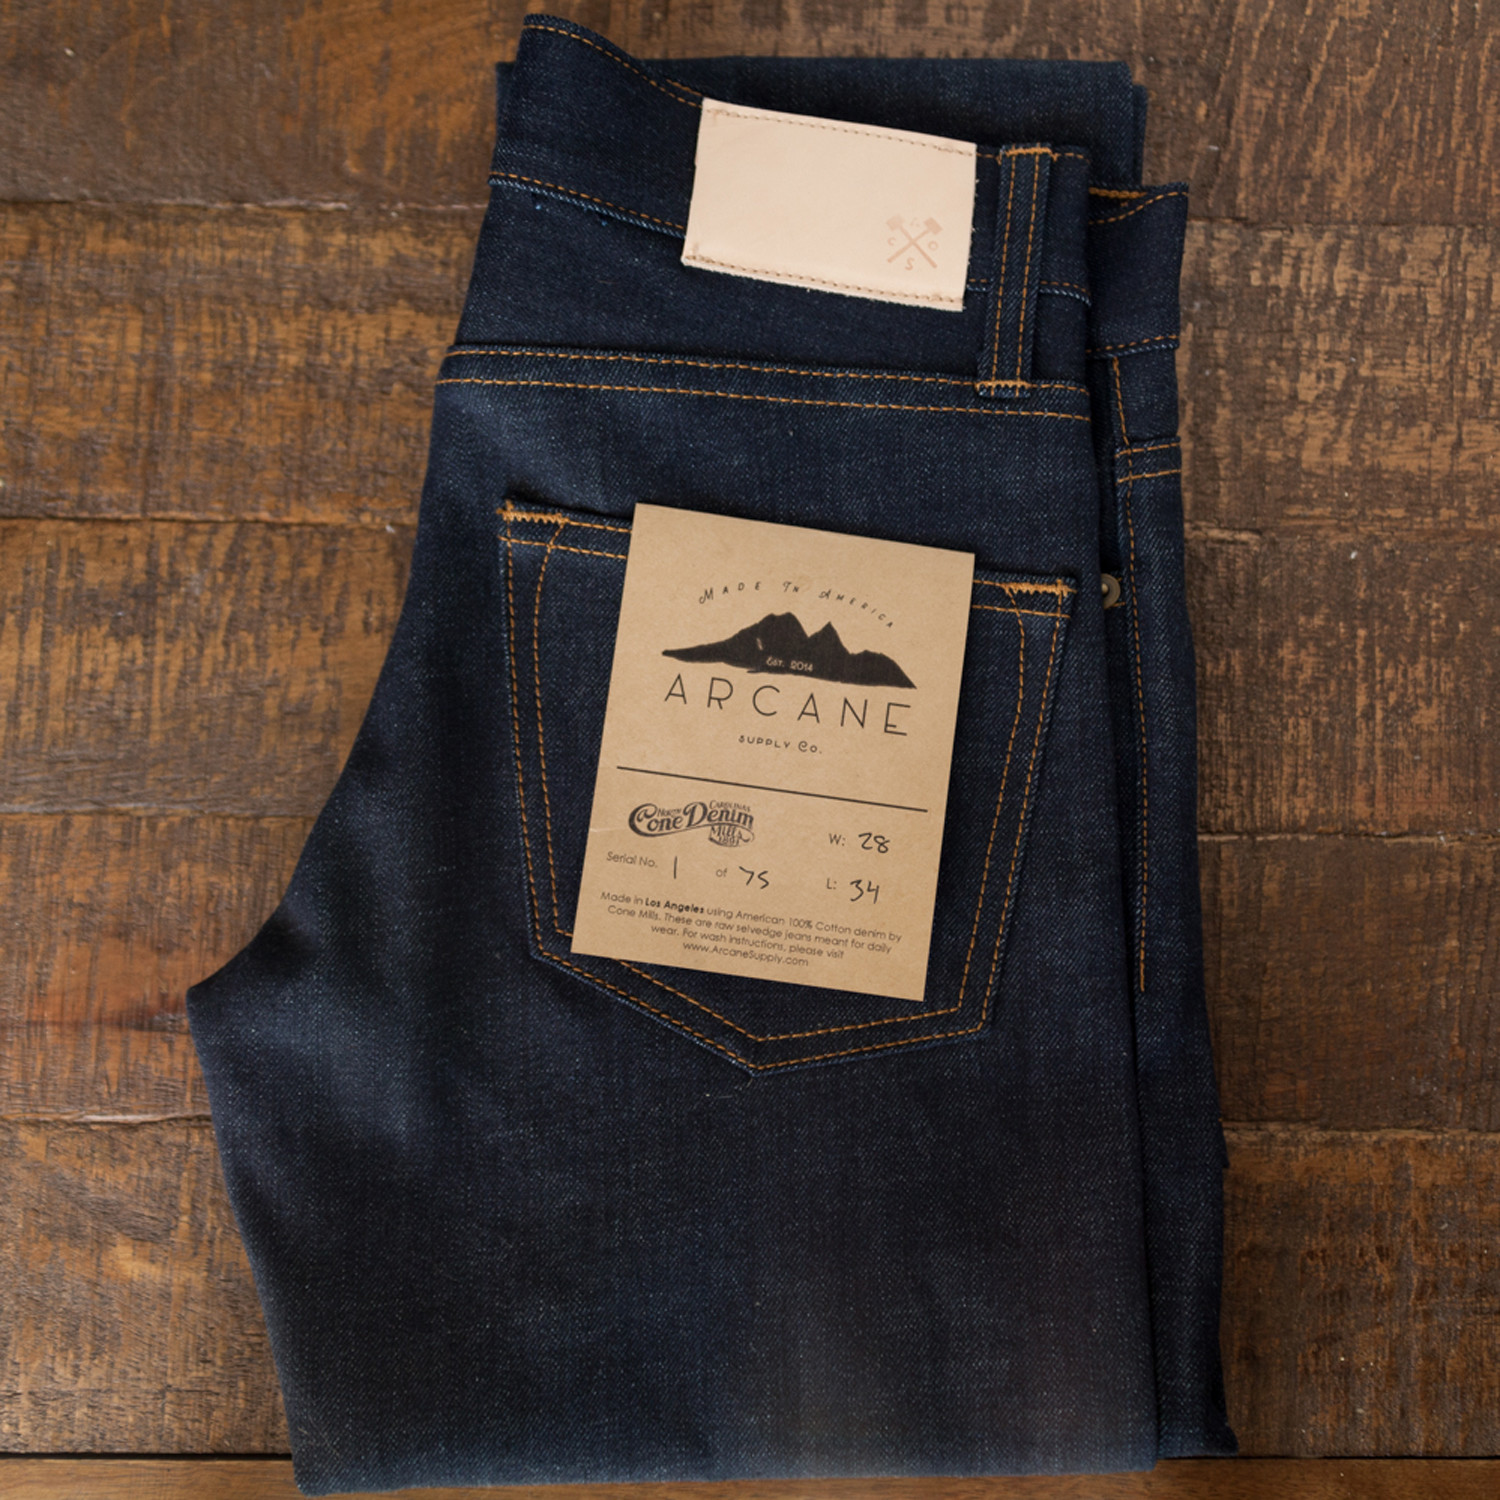 cone mills selvedge jeans